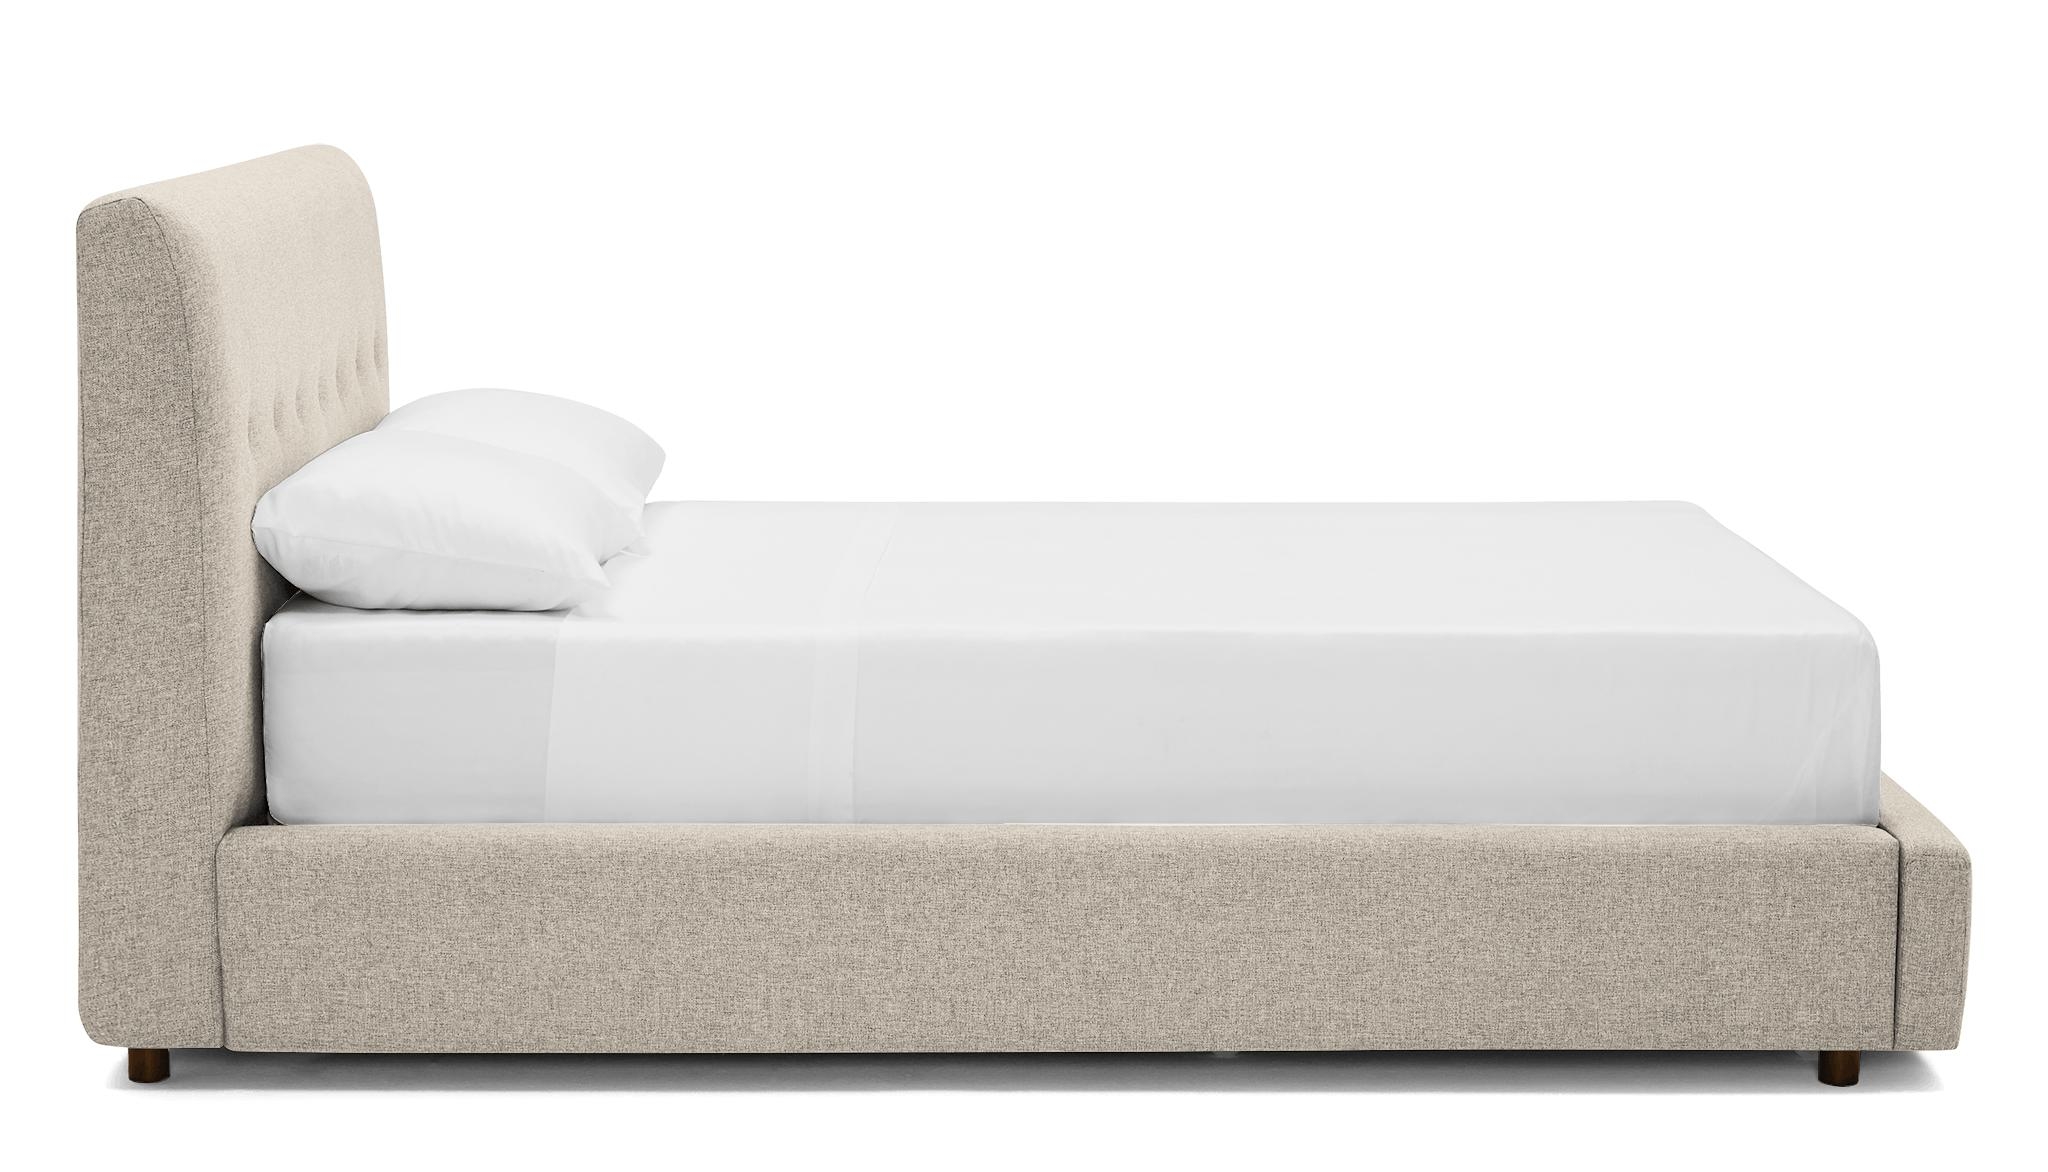 Beige/White Alvin Mid Century Modern Storage Bed - Cody Sandstone - Mocha - Eastern King - Image 2